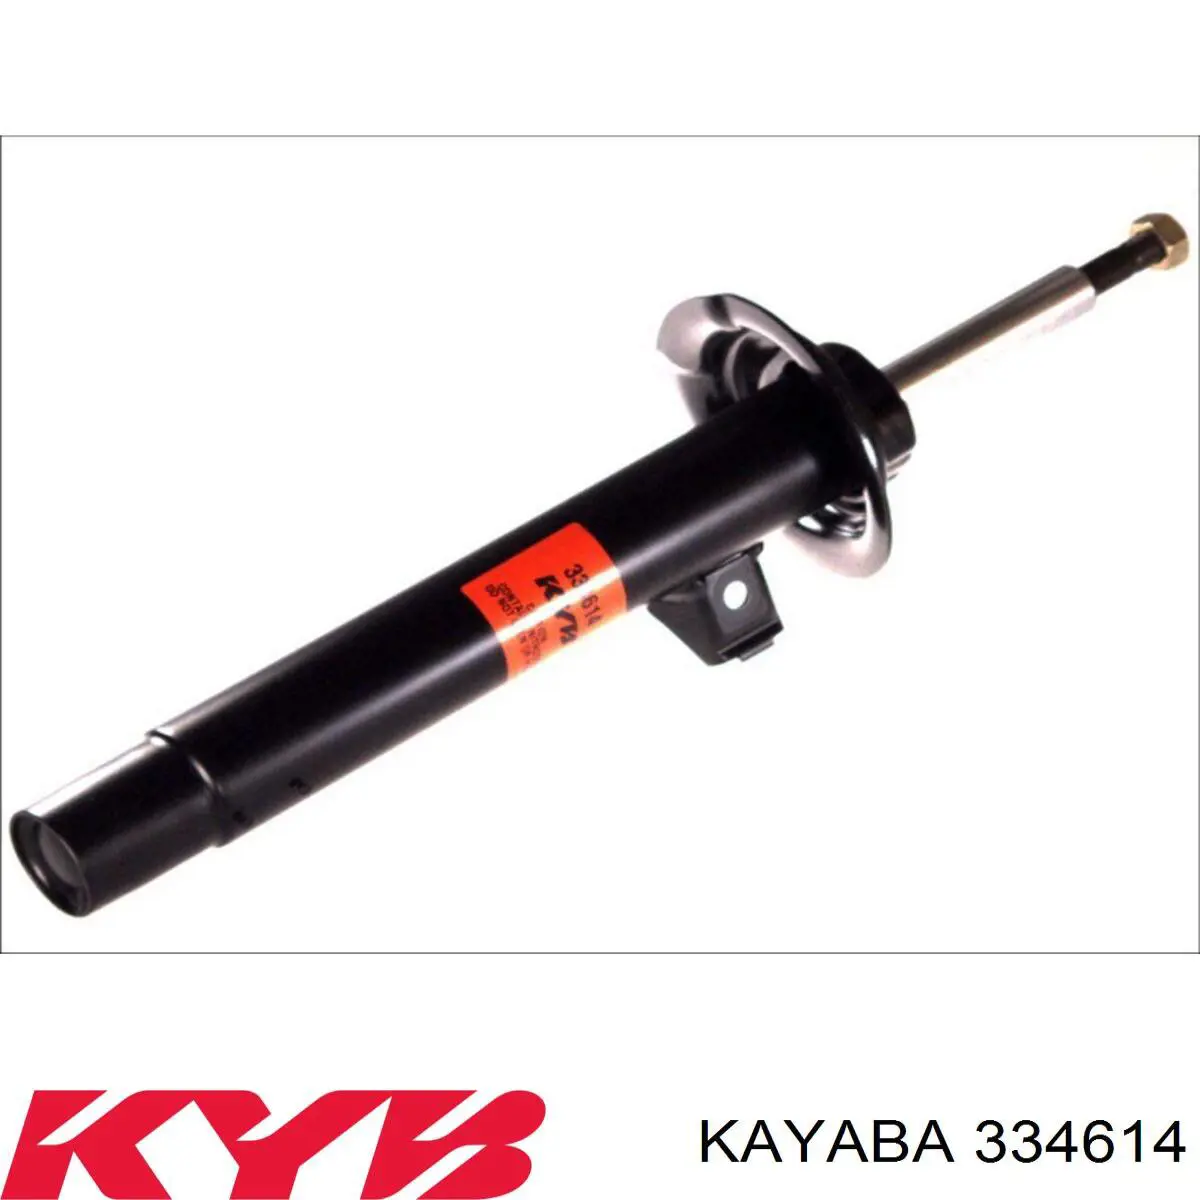 334614 Kayaba amortecedor dianteiro direito